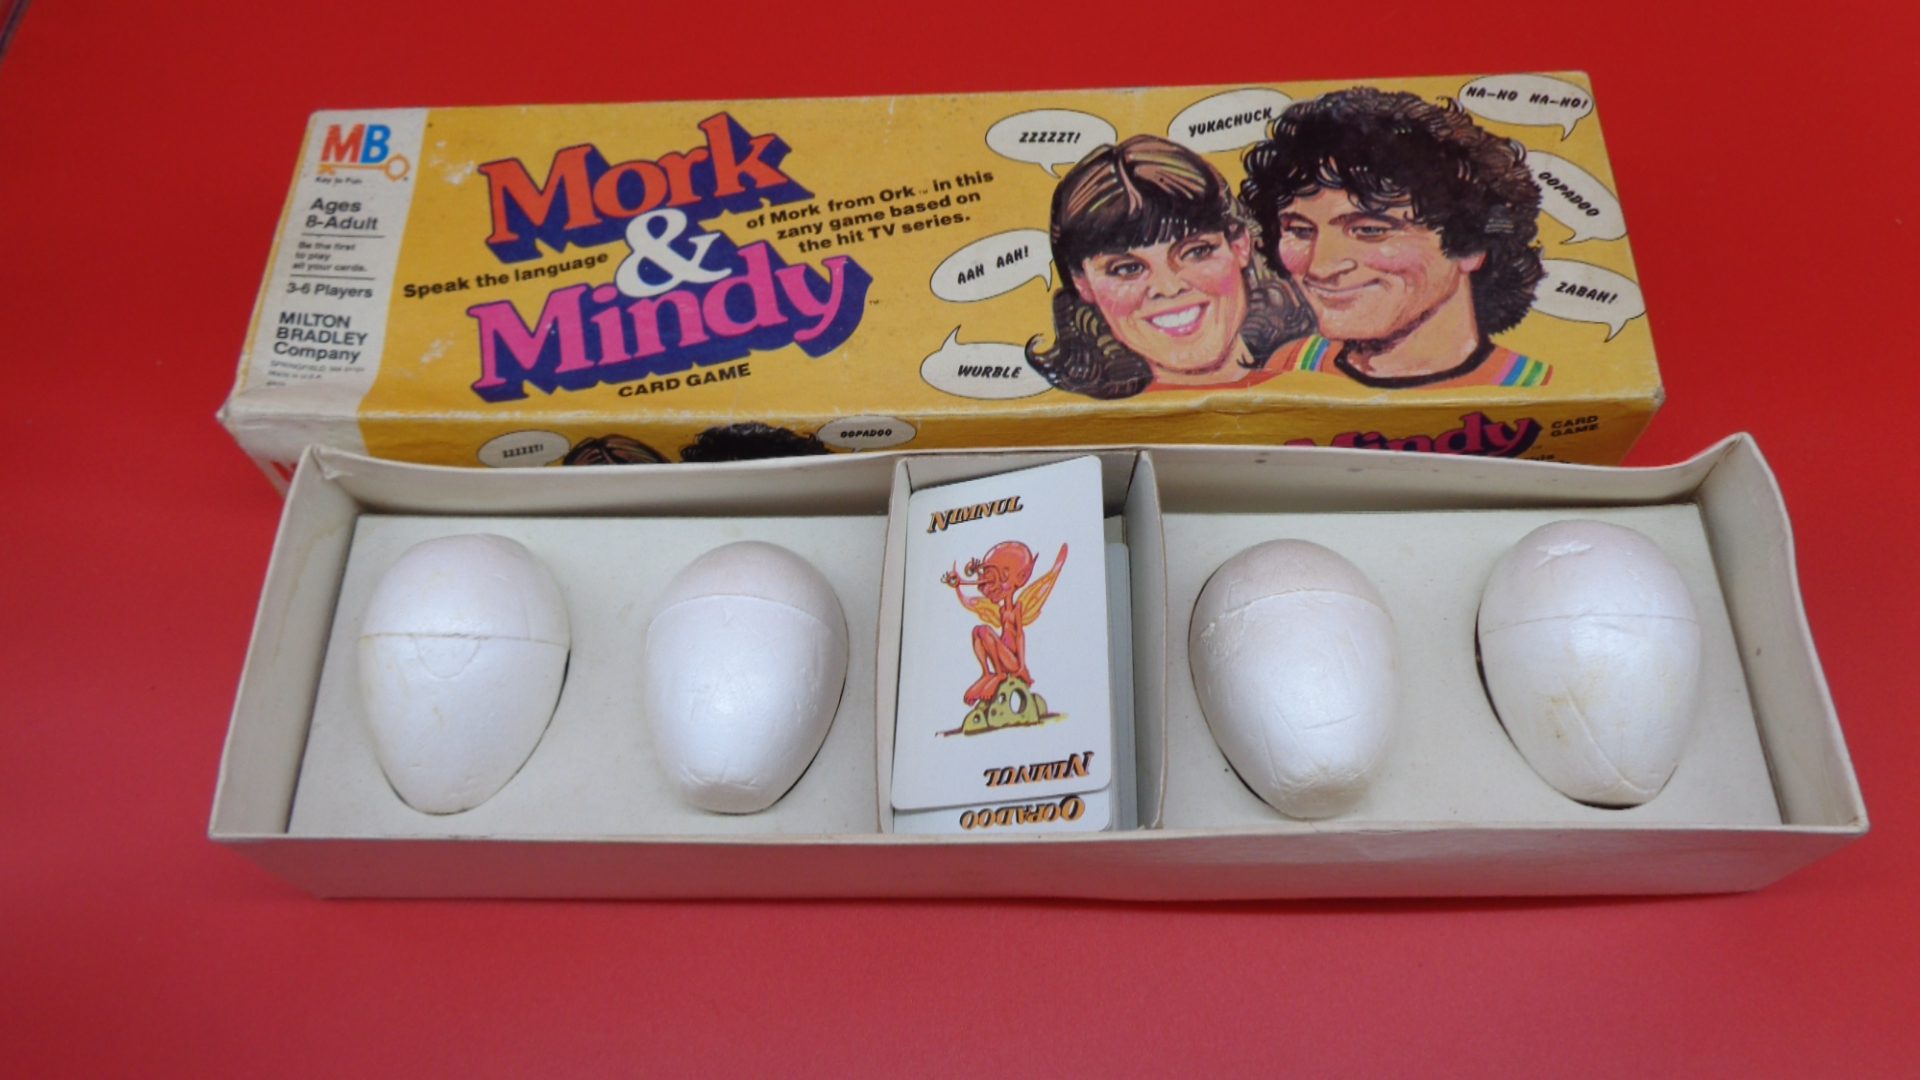 Mork & Mindy game